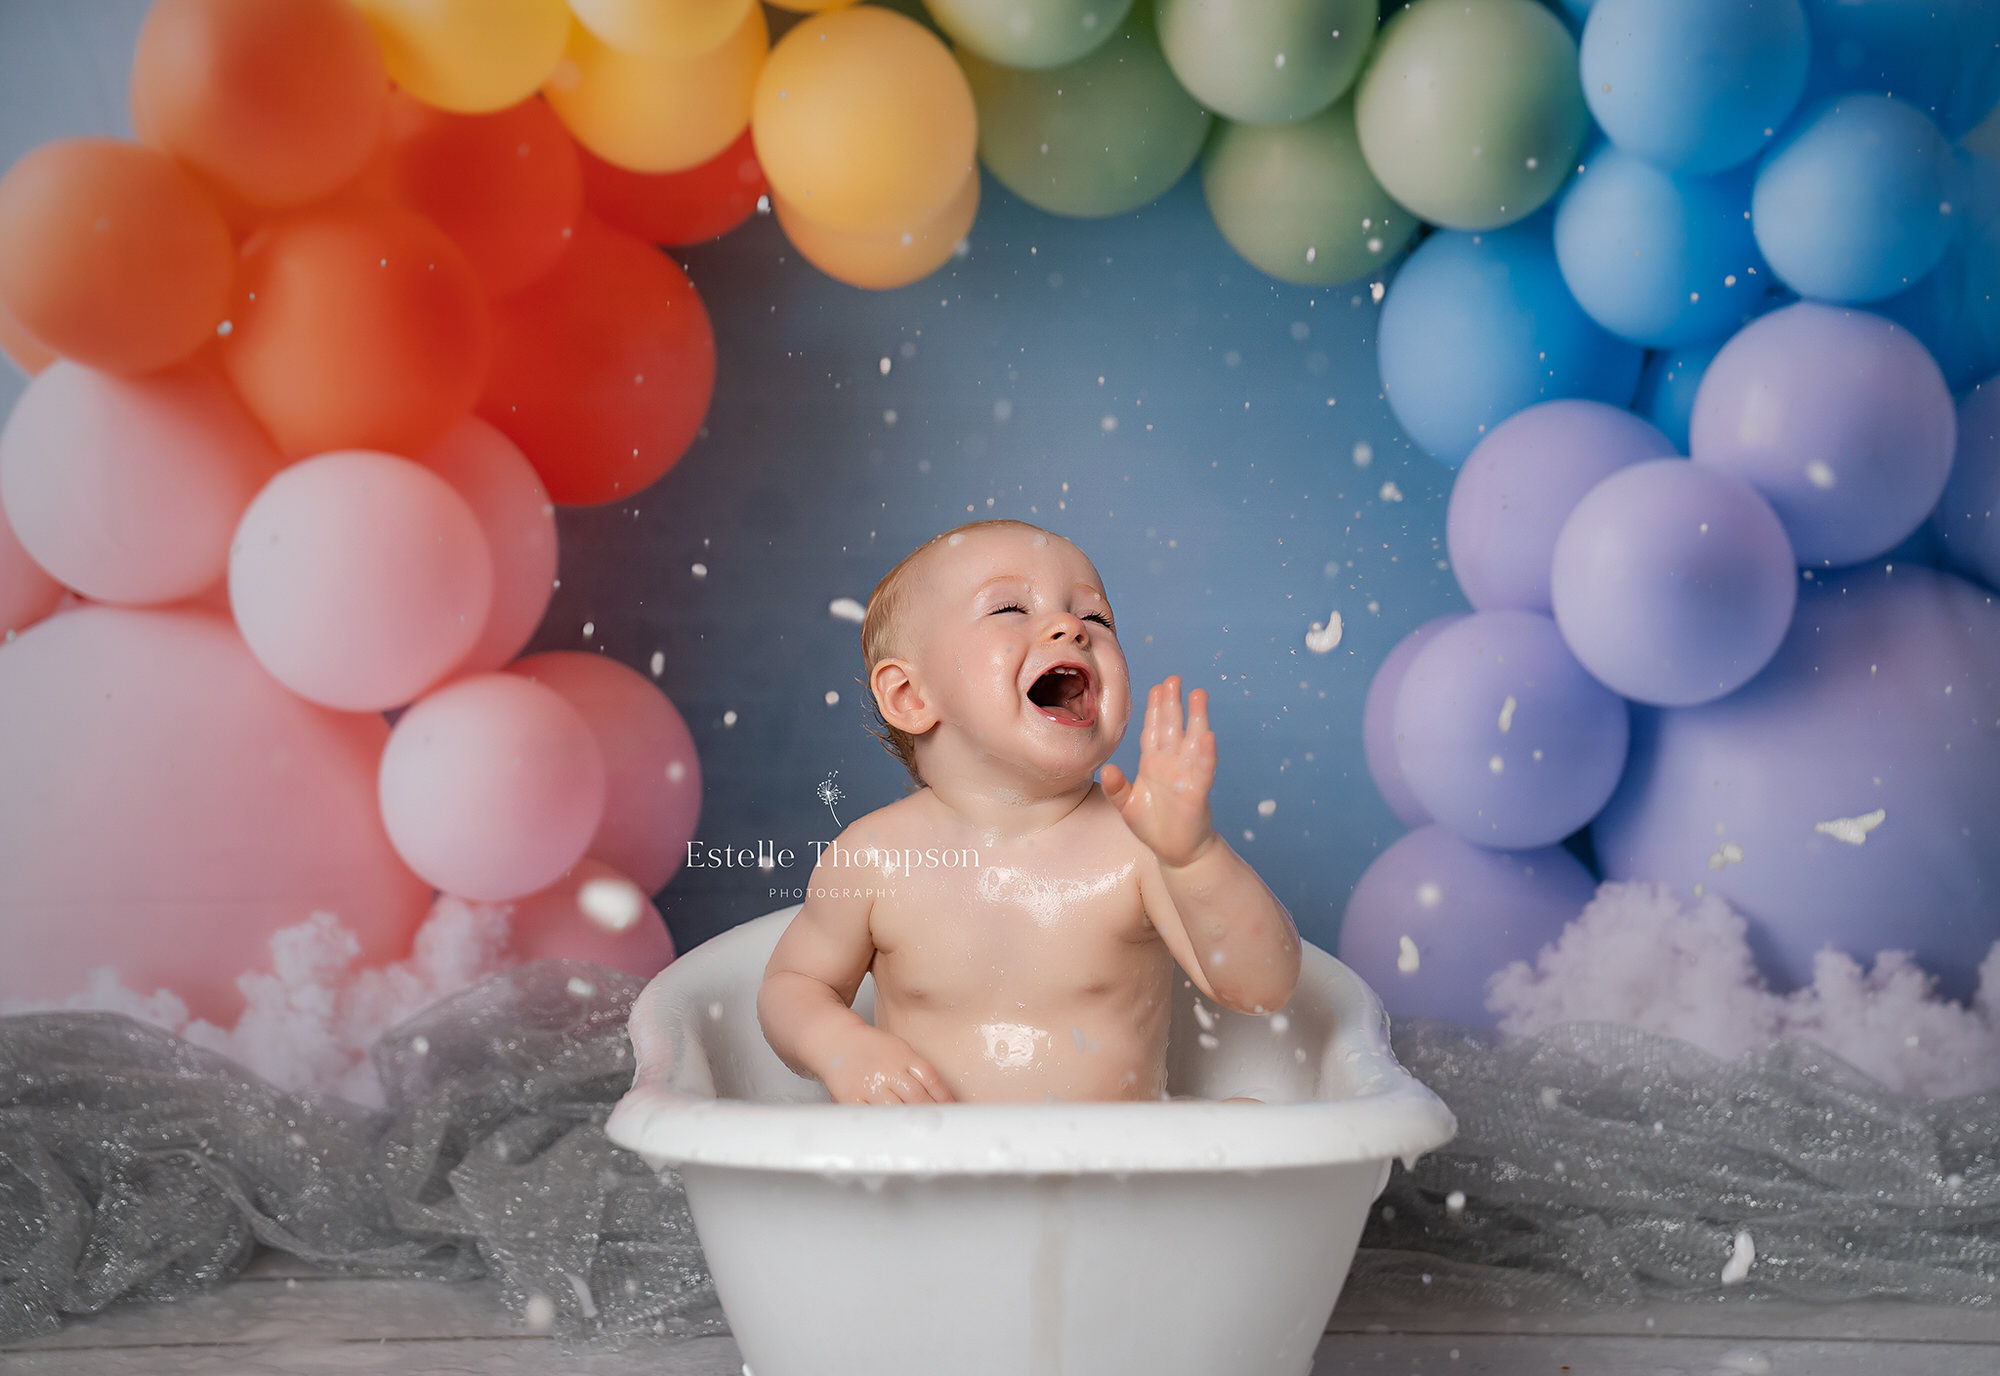 Baby girl splashing in the bath tub after her cake smash photoshoot